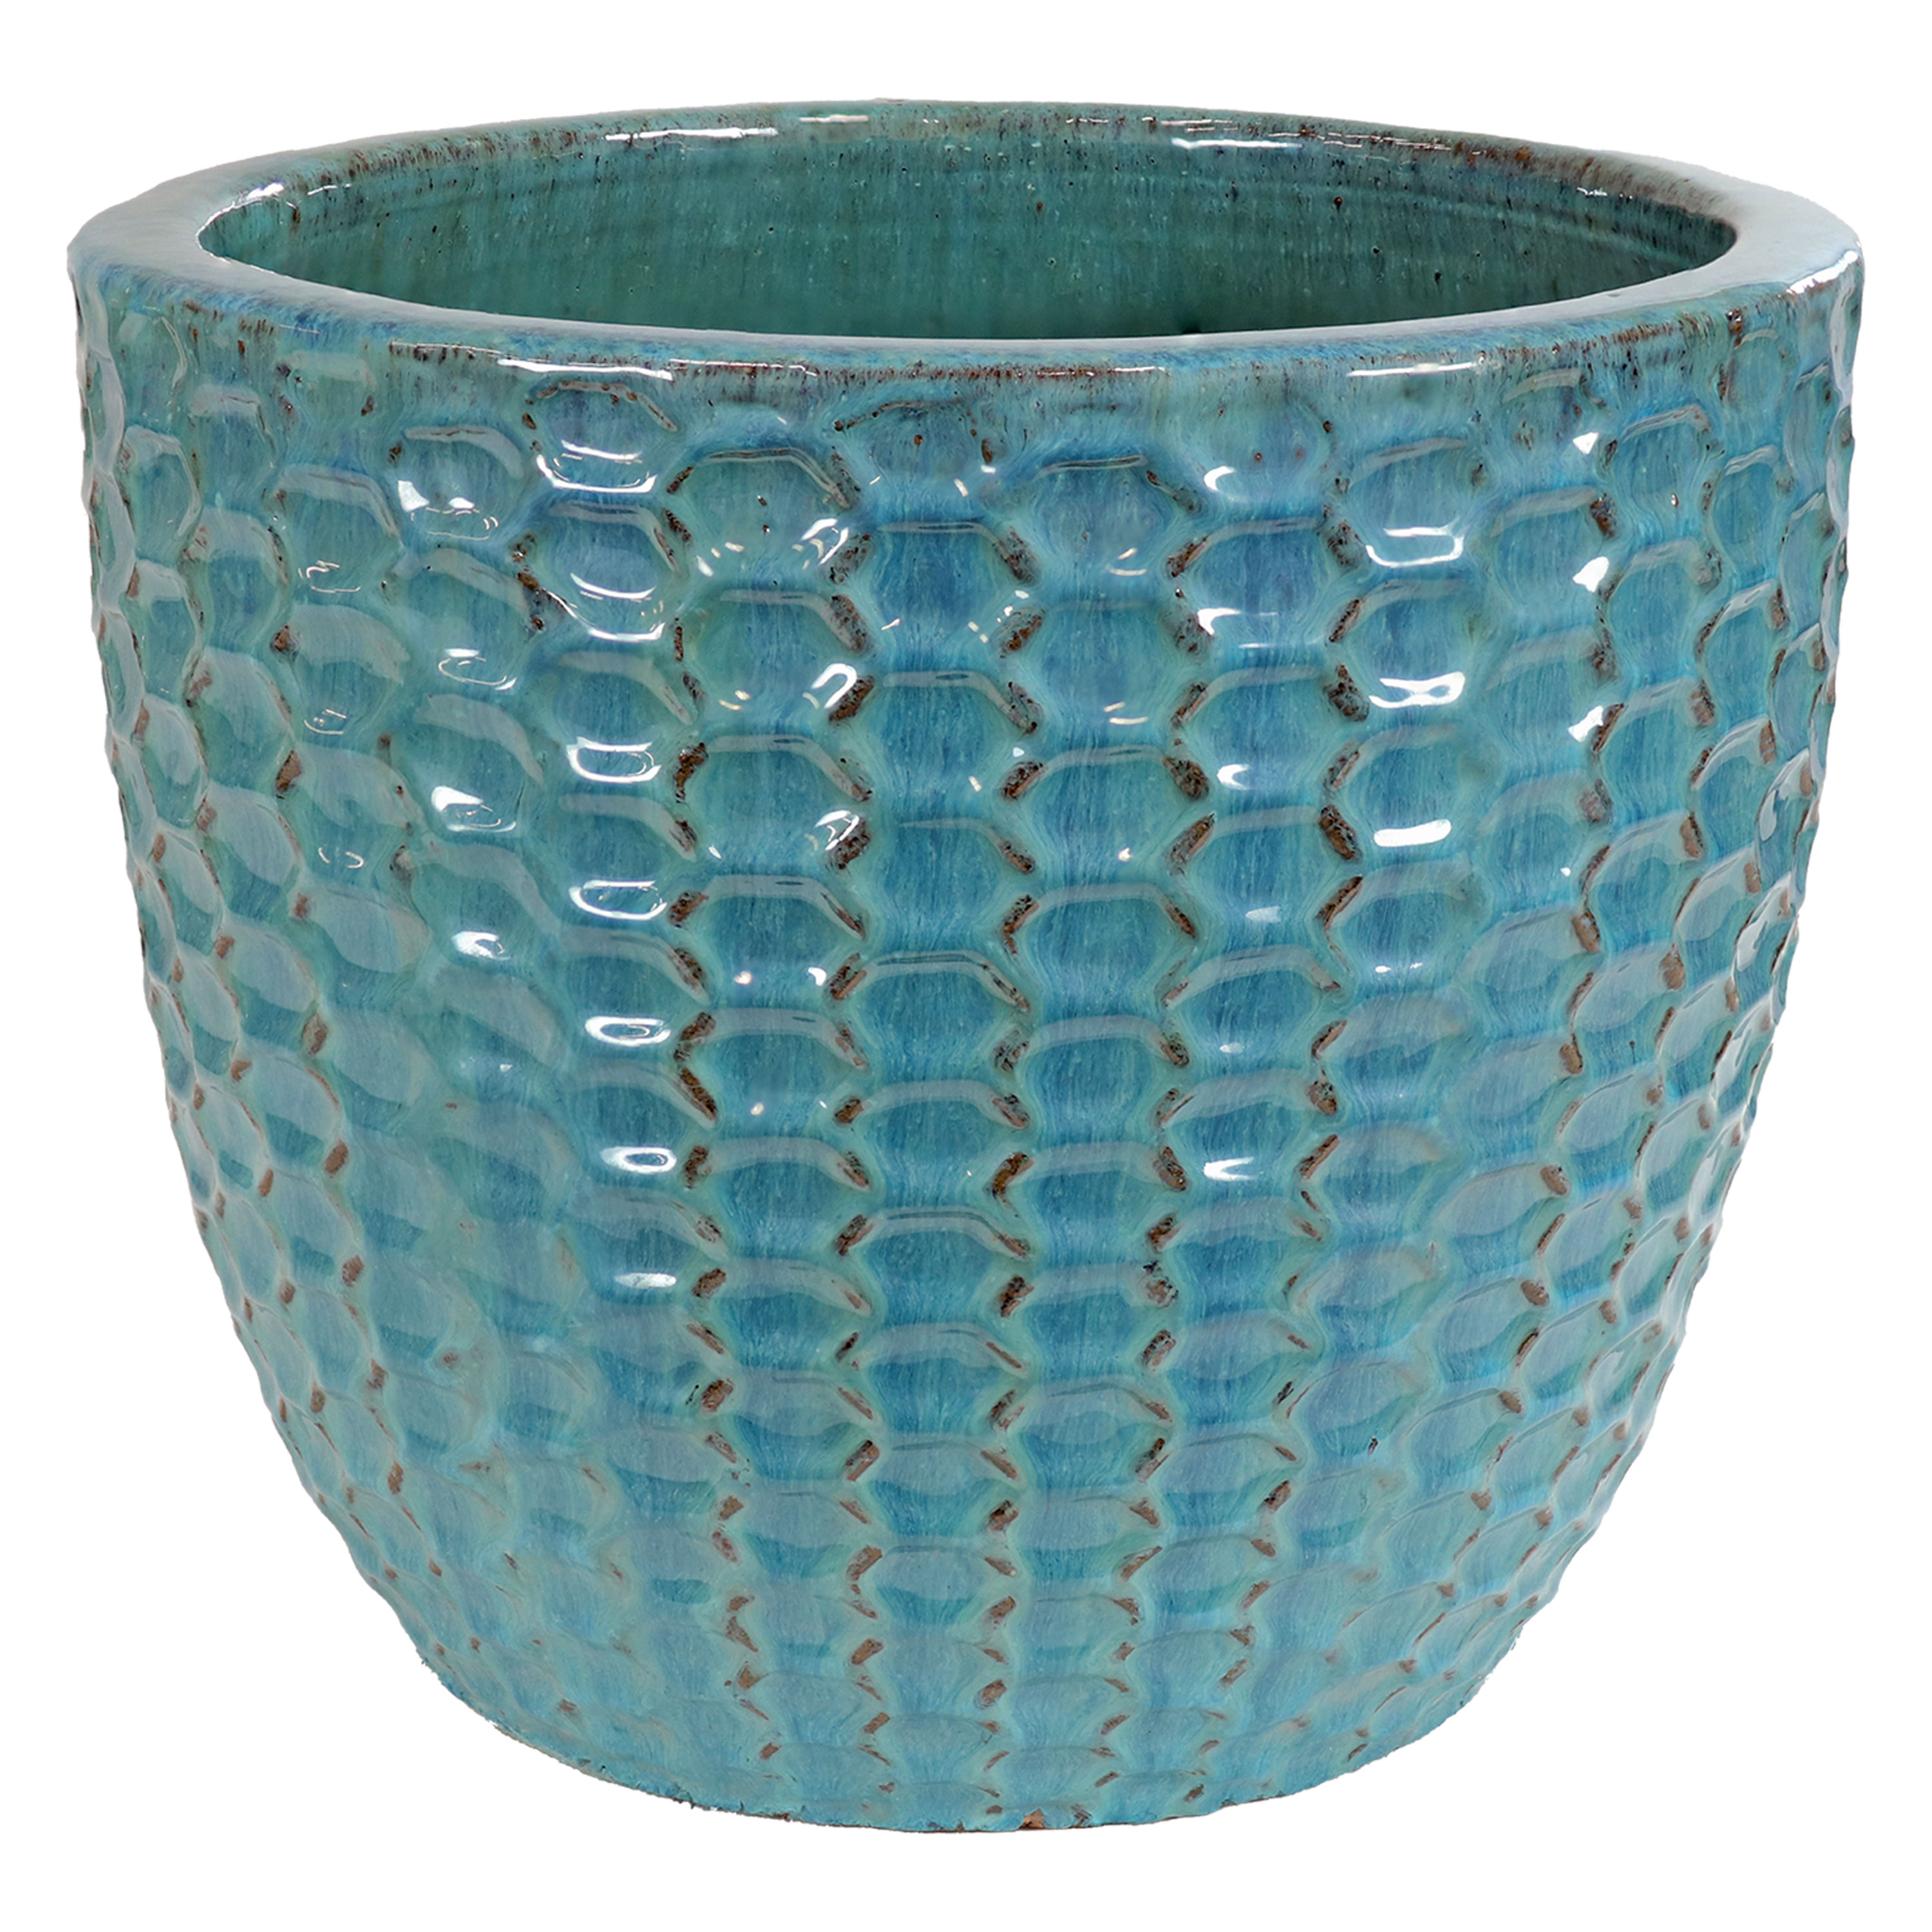 Turquoise Raised Hexagon Pattern Ceramic Planter - 14"